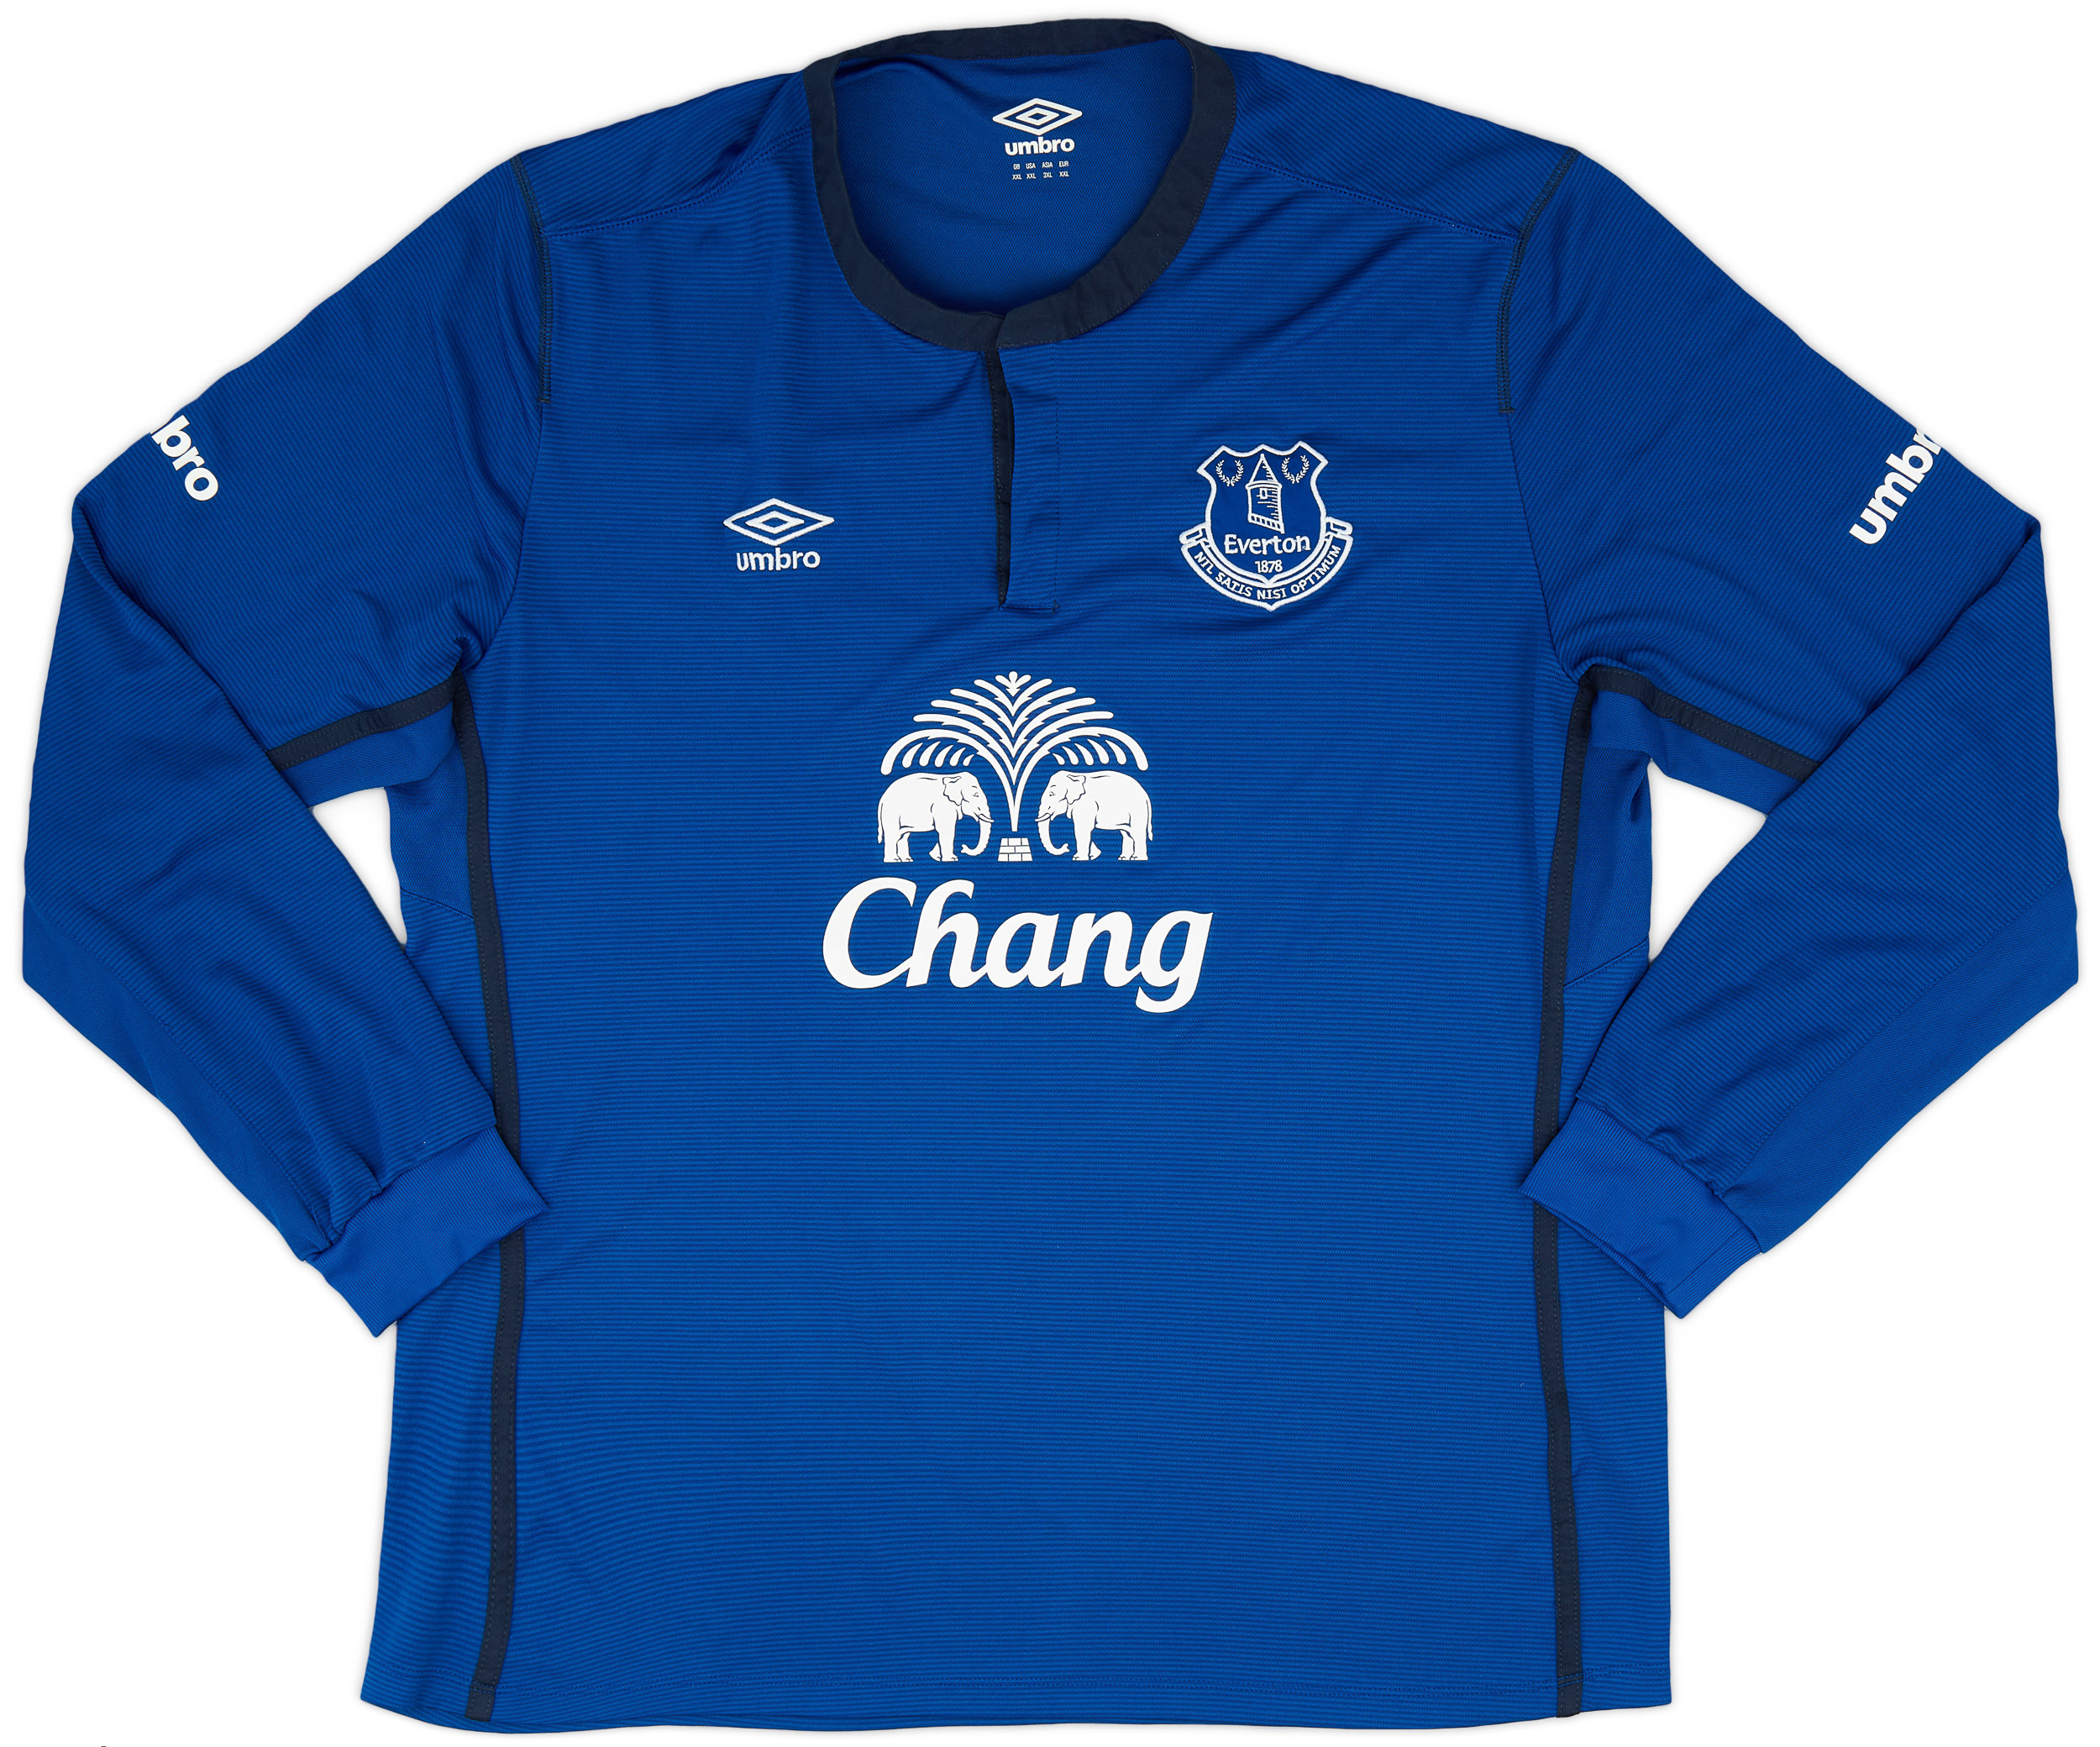 2014-15 Everton Home Shirt - 9/10 - ()